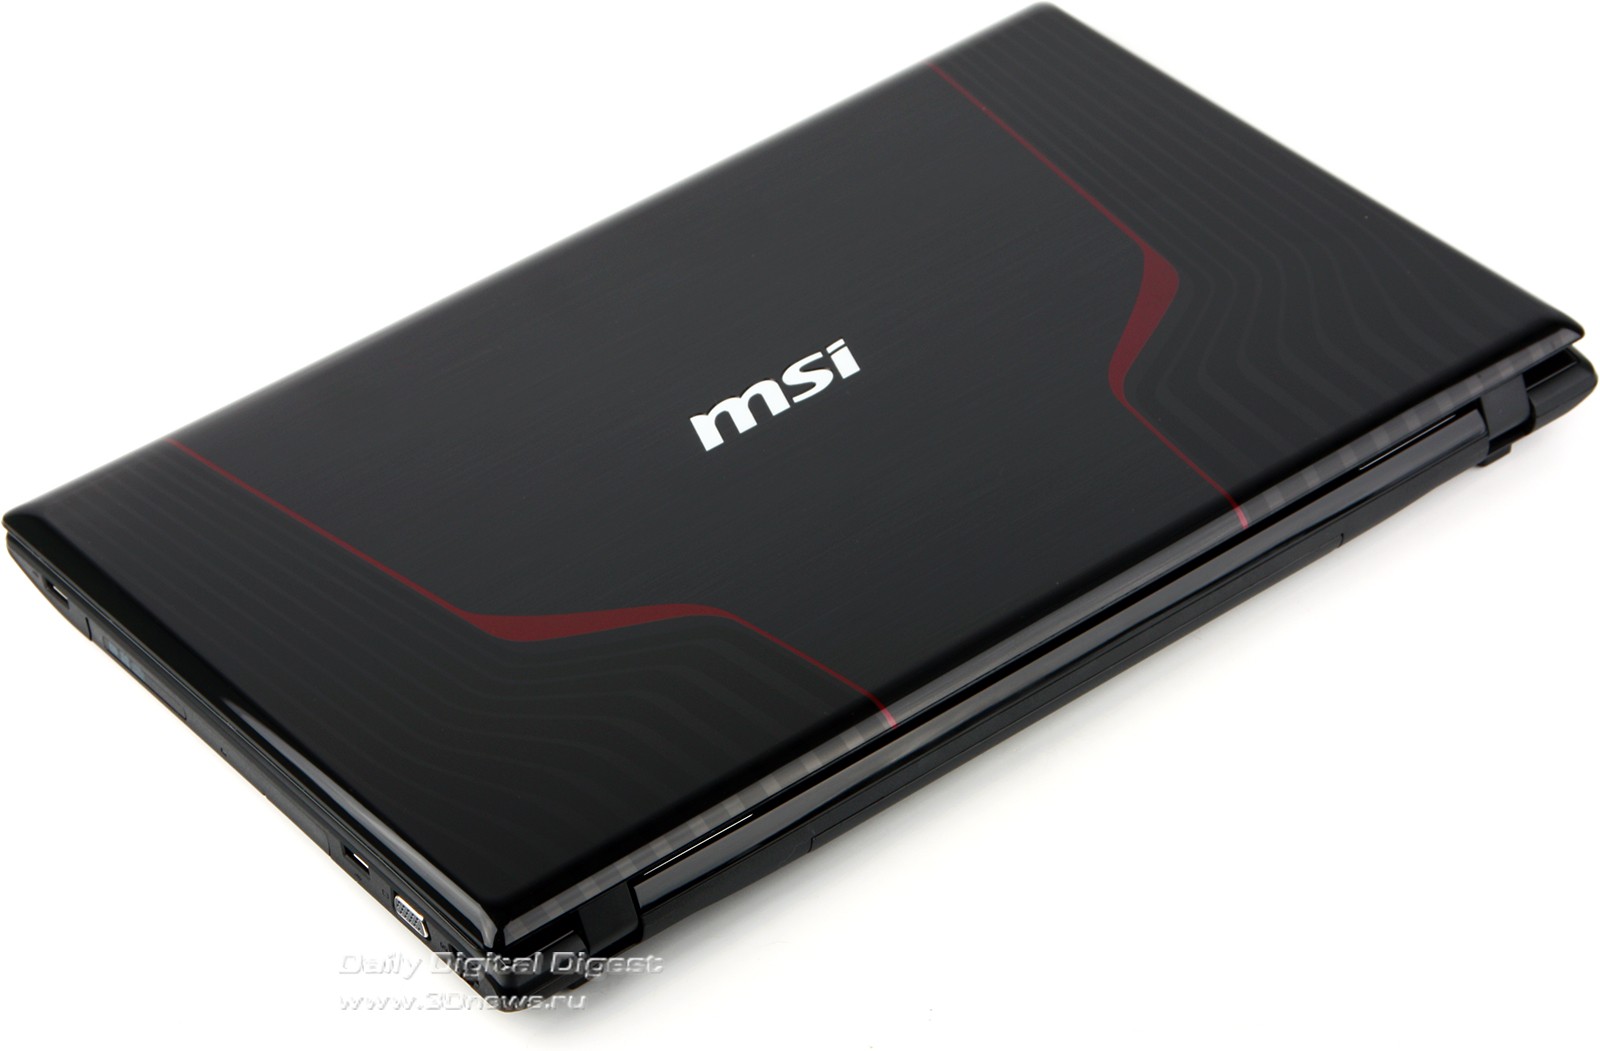 Игровой Ноутбук Msi Ge70 Цена